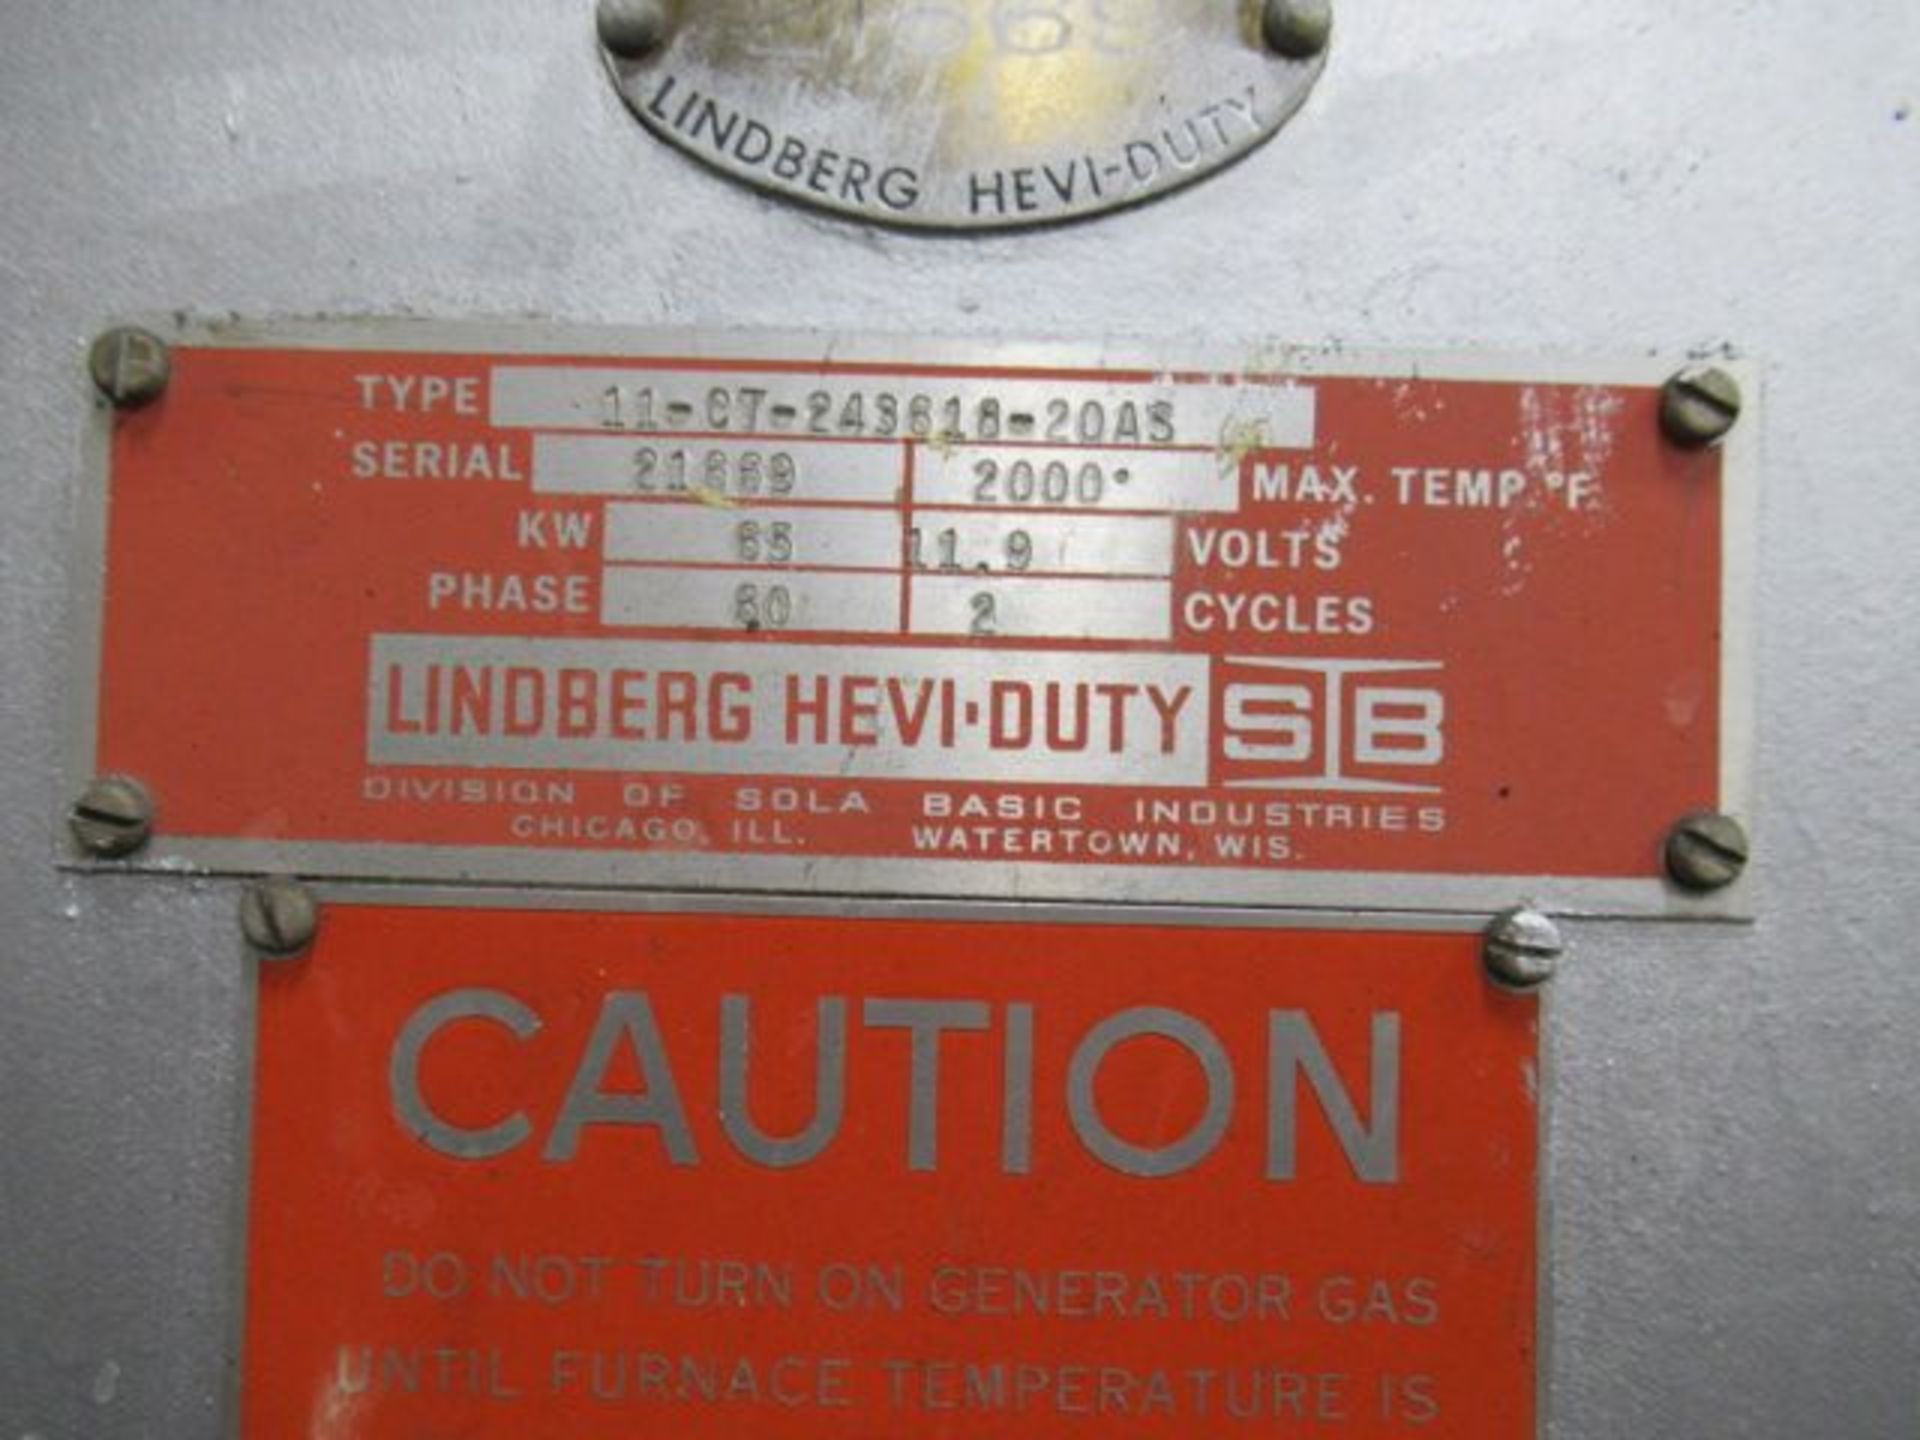 LINDBERG HEVI-DUTY Type 11-CT-243618 Oven, s/n 21669, w/ 65 kw, 2000 deg F Cap. ($1800 Rigging - Image 5 of 5